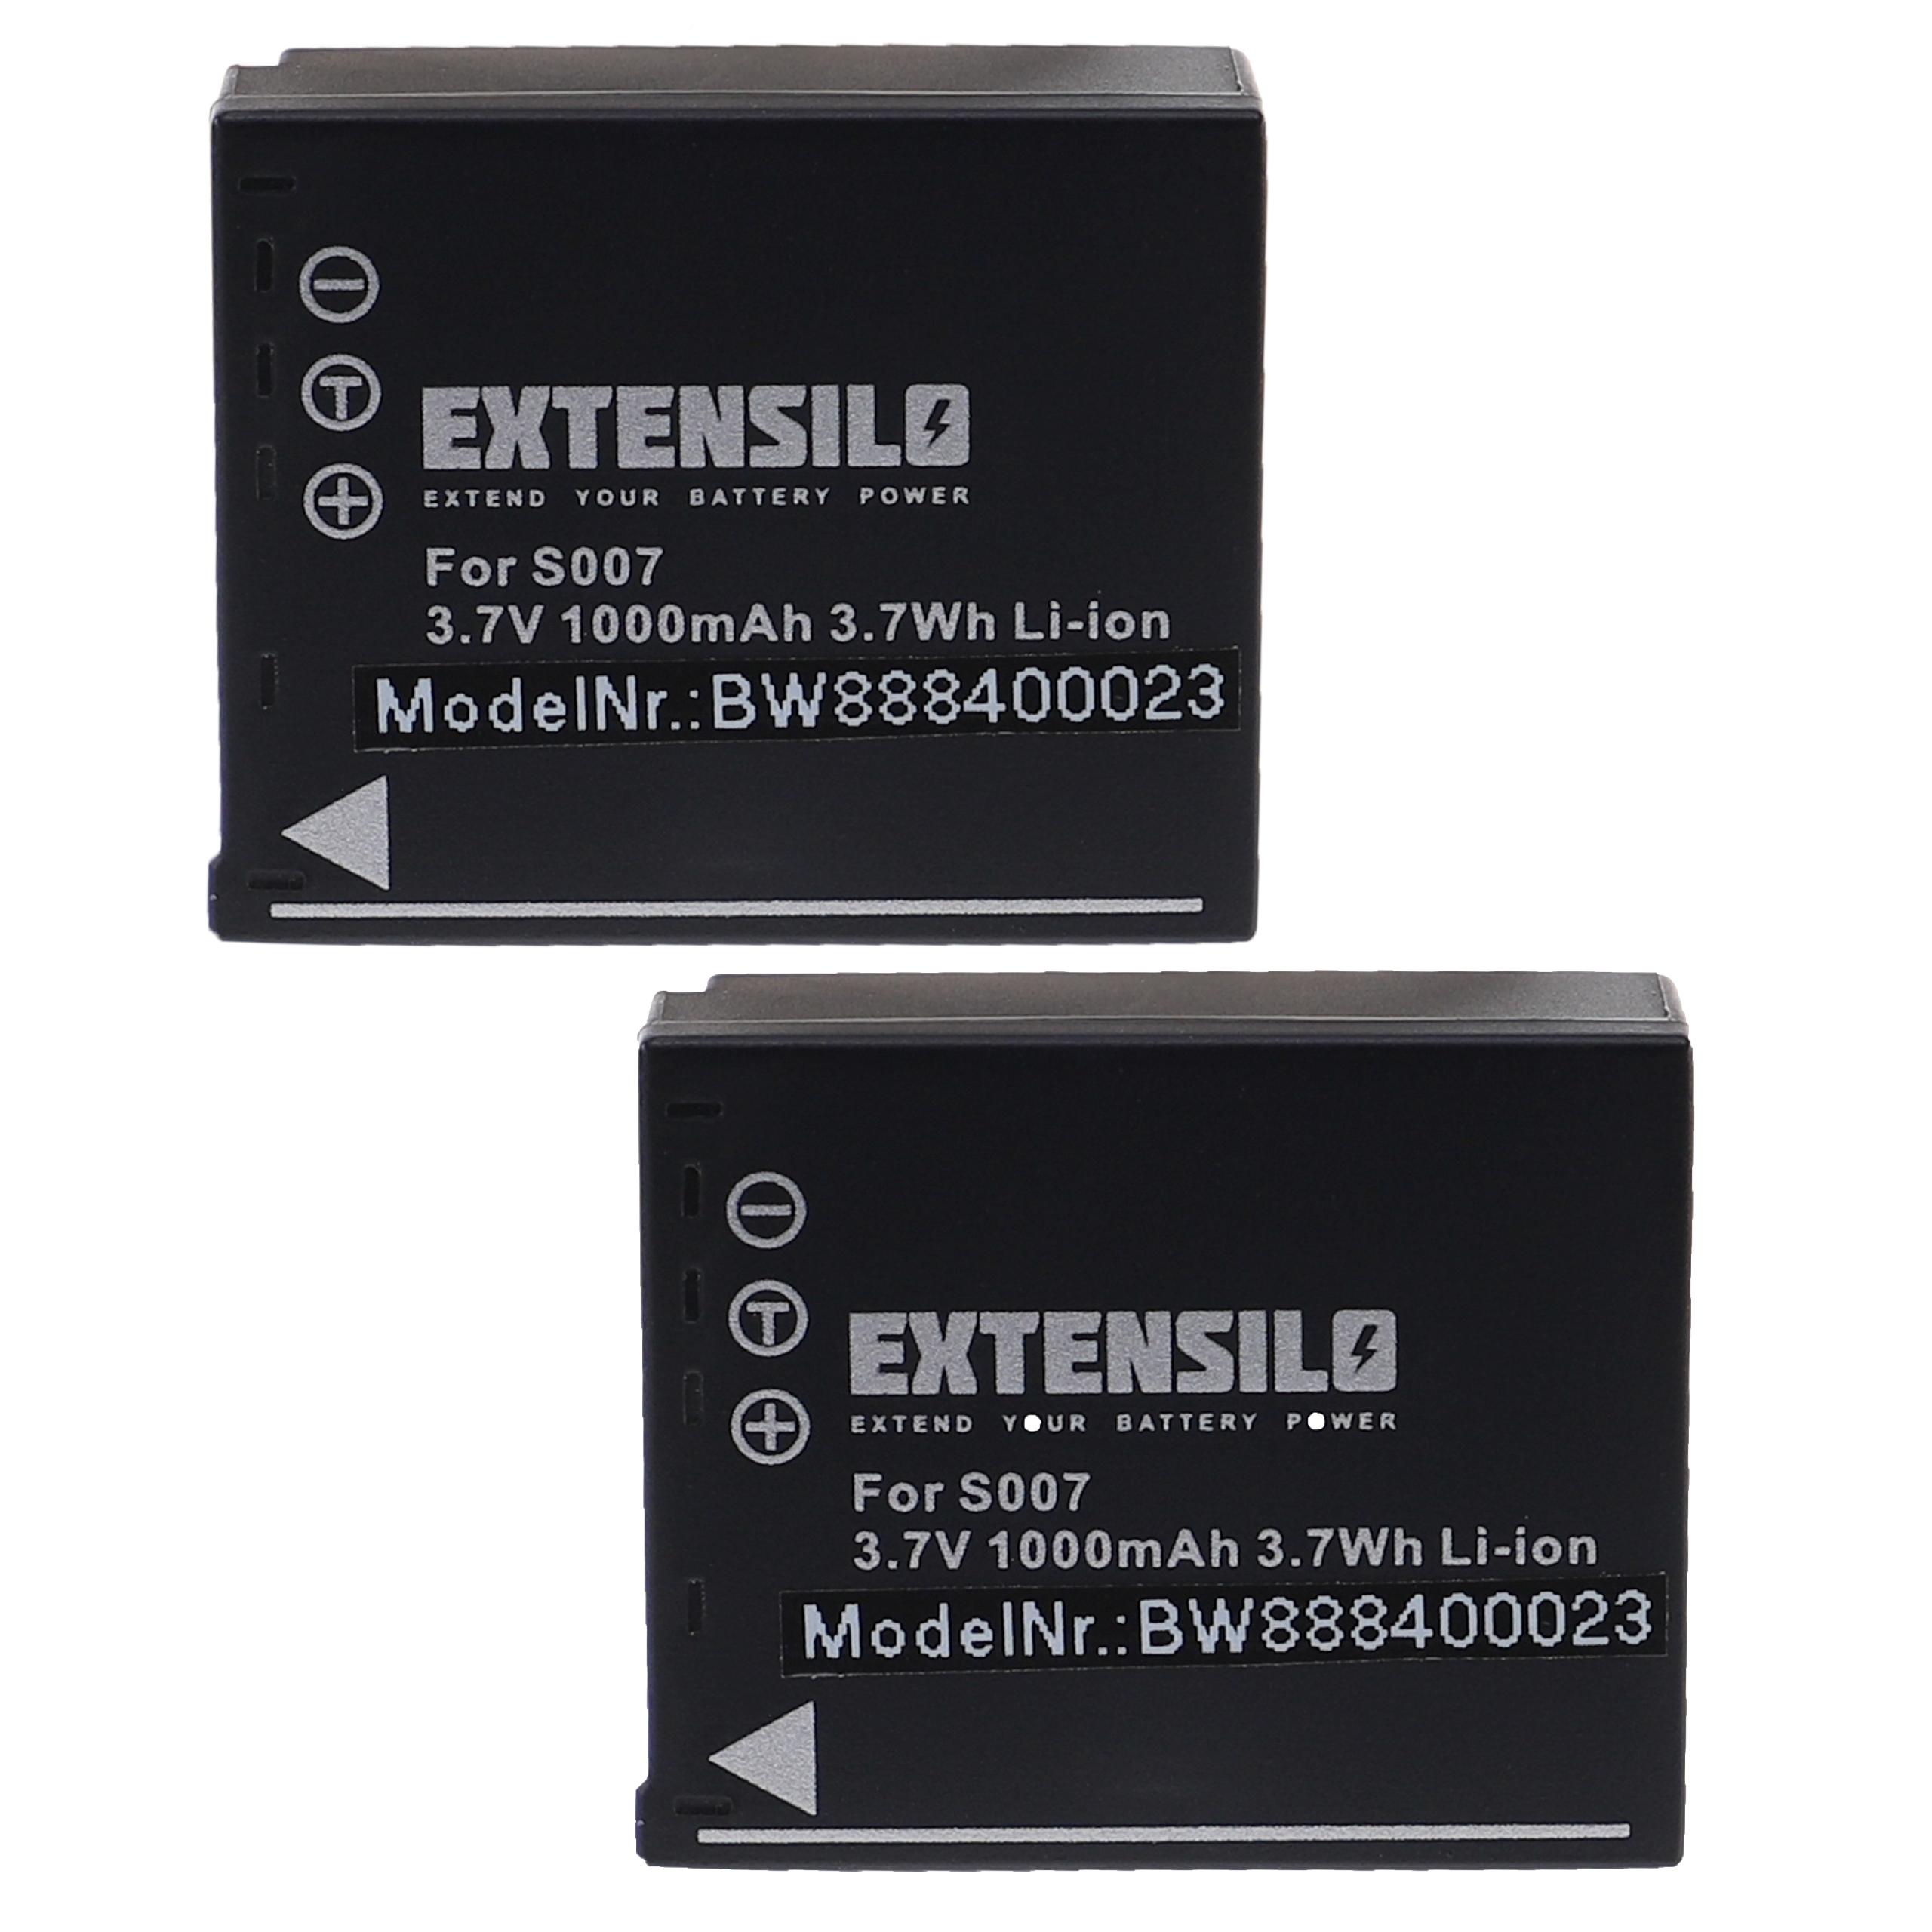 Batteries (2x pièces) remplace Panasonic CGA-S007, CGA-S007A/1B pour appareil photo - 1000mAh 3,7V Li-ion